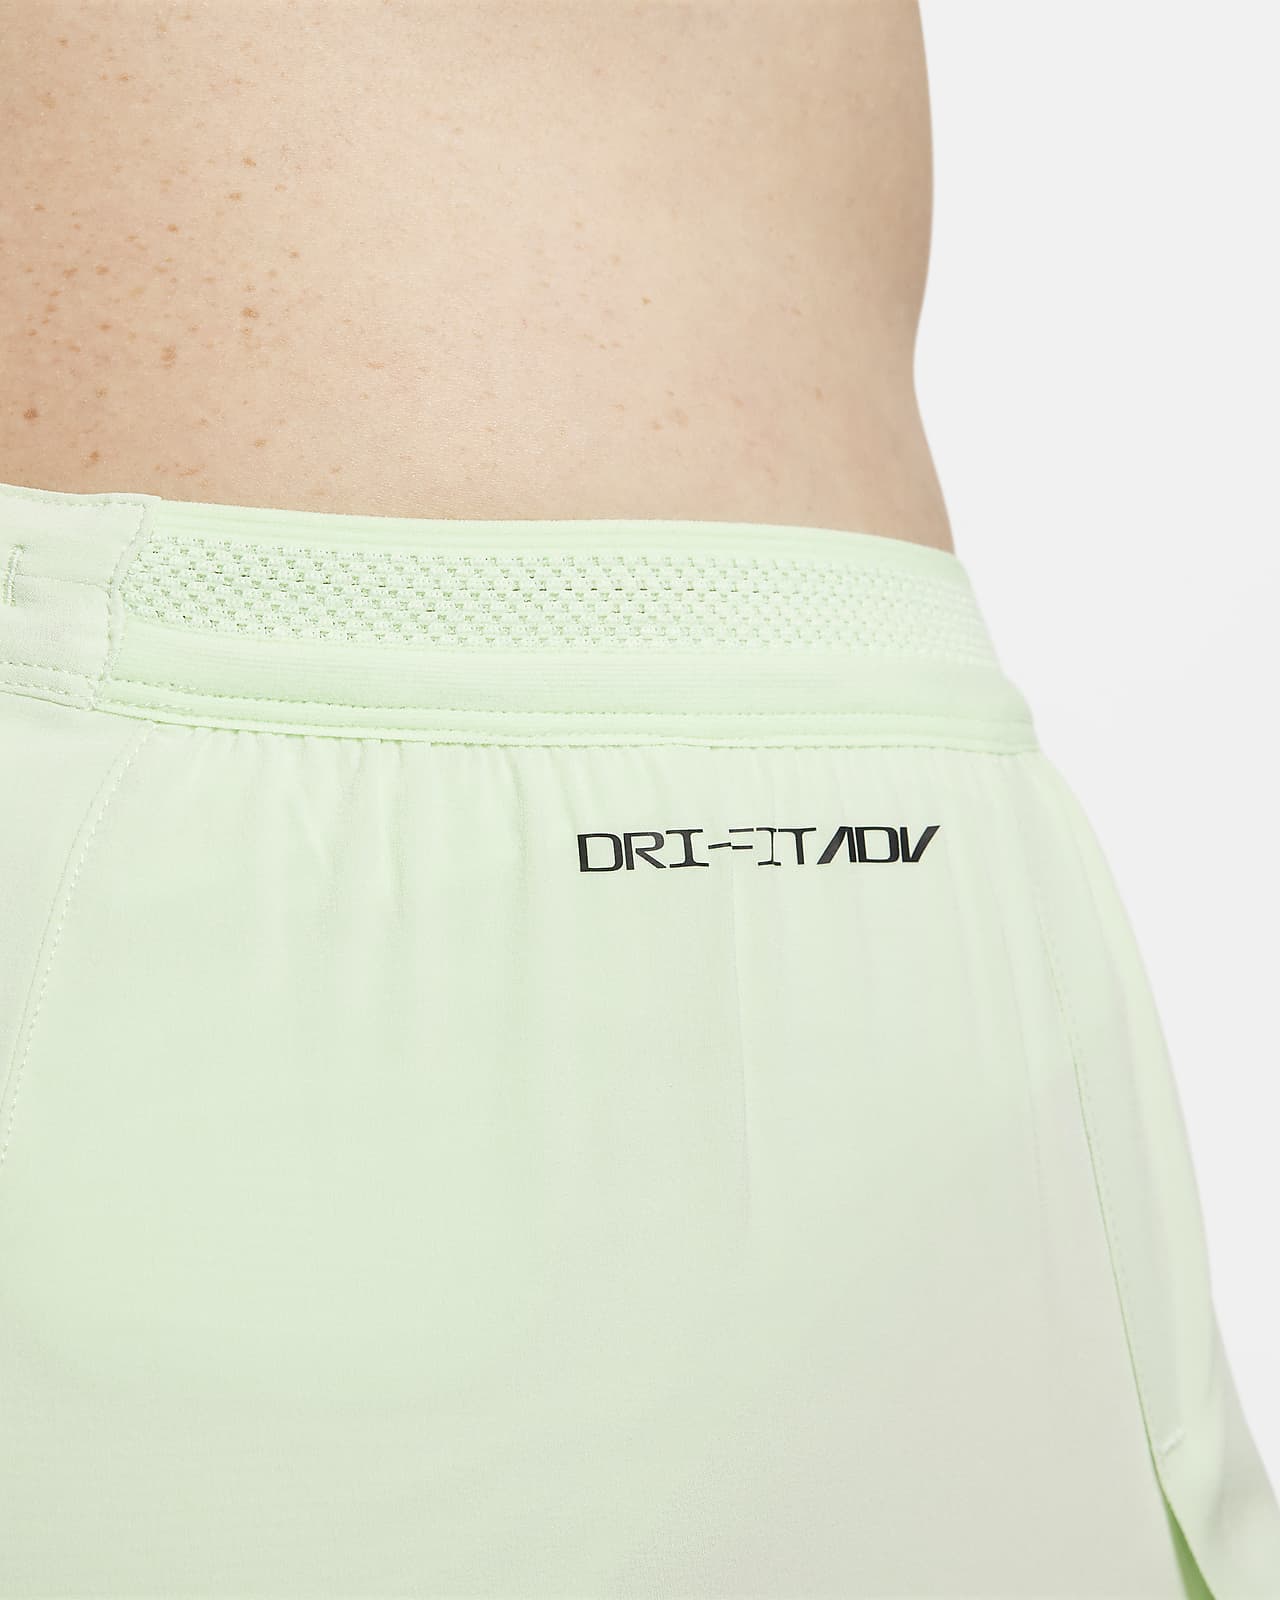 Nike AeroSwift Men's Dri-FIT ADV 2 Brief-Lined Running Shorts.